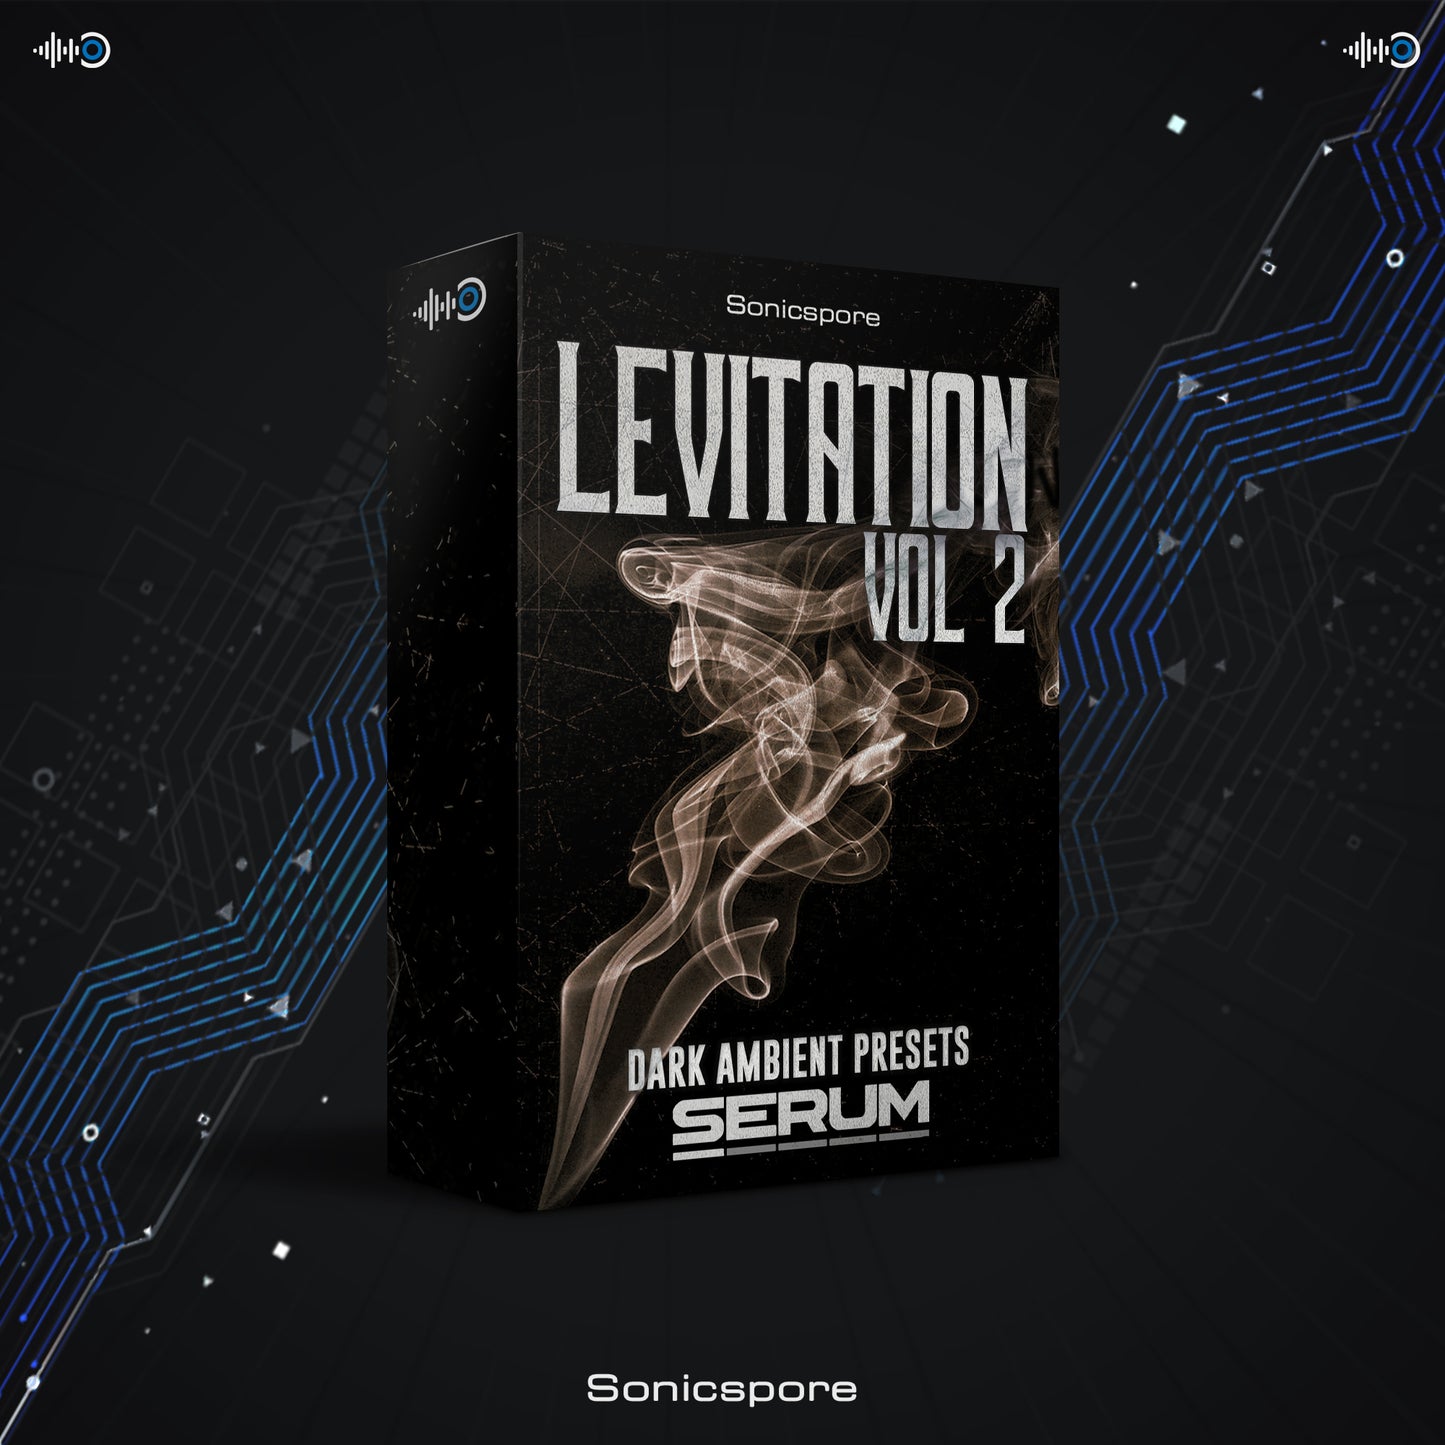 Sonicspore - LEVITATION vol 2 - Dark Ambient (Serum)